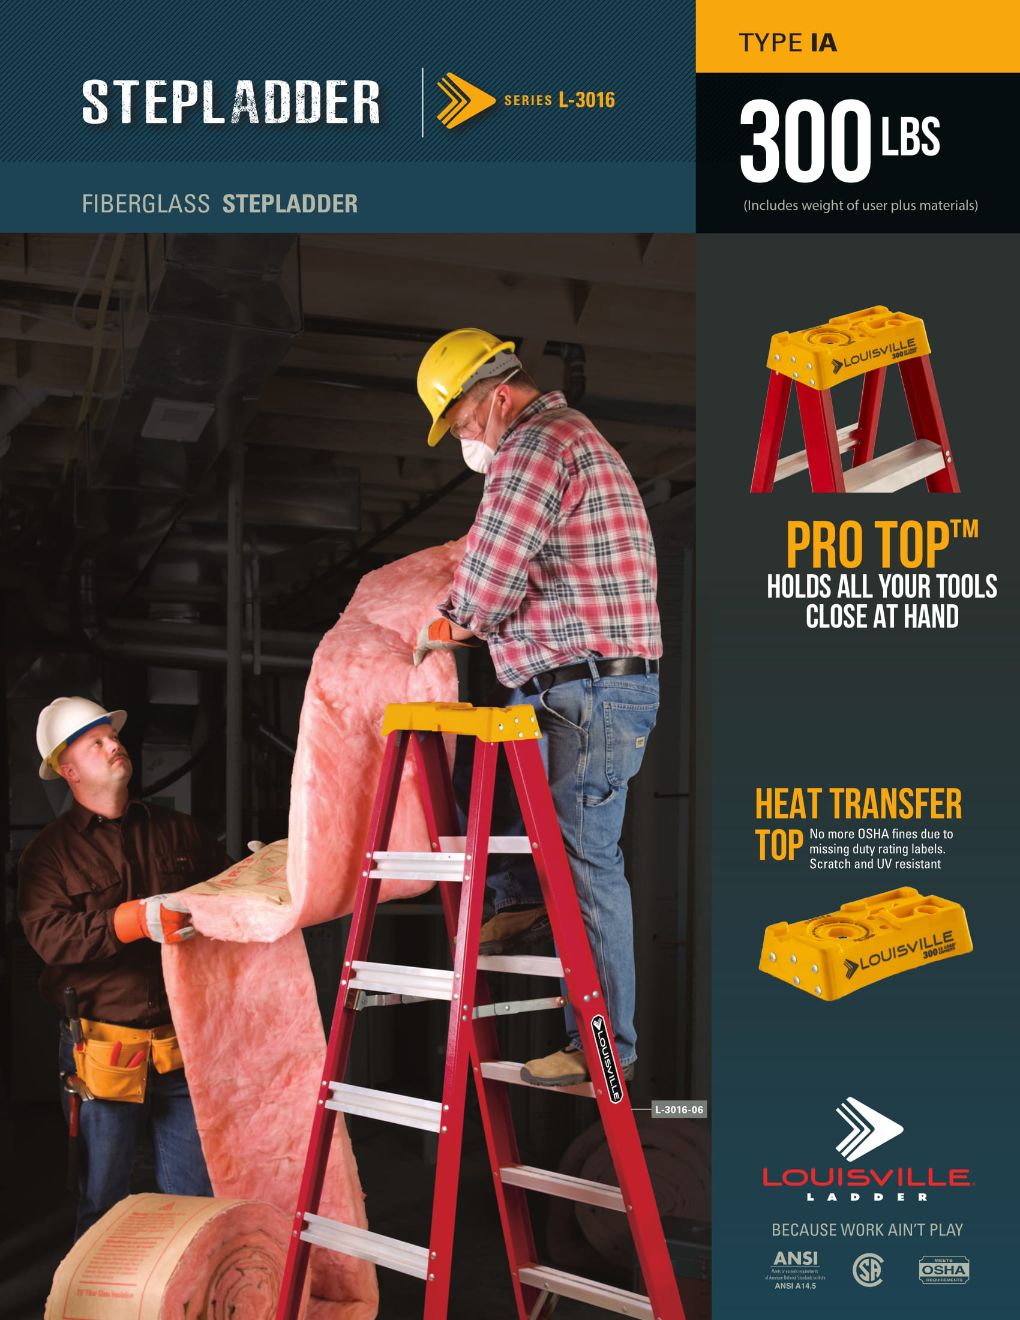 L-3016 Stepladder Flyer and Spec Sheet Marketing Material Image